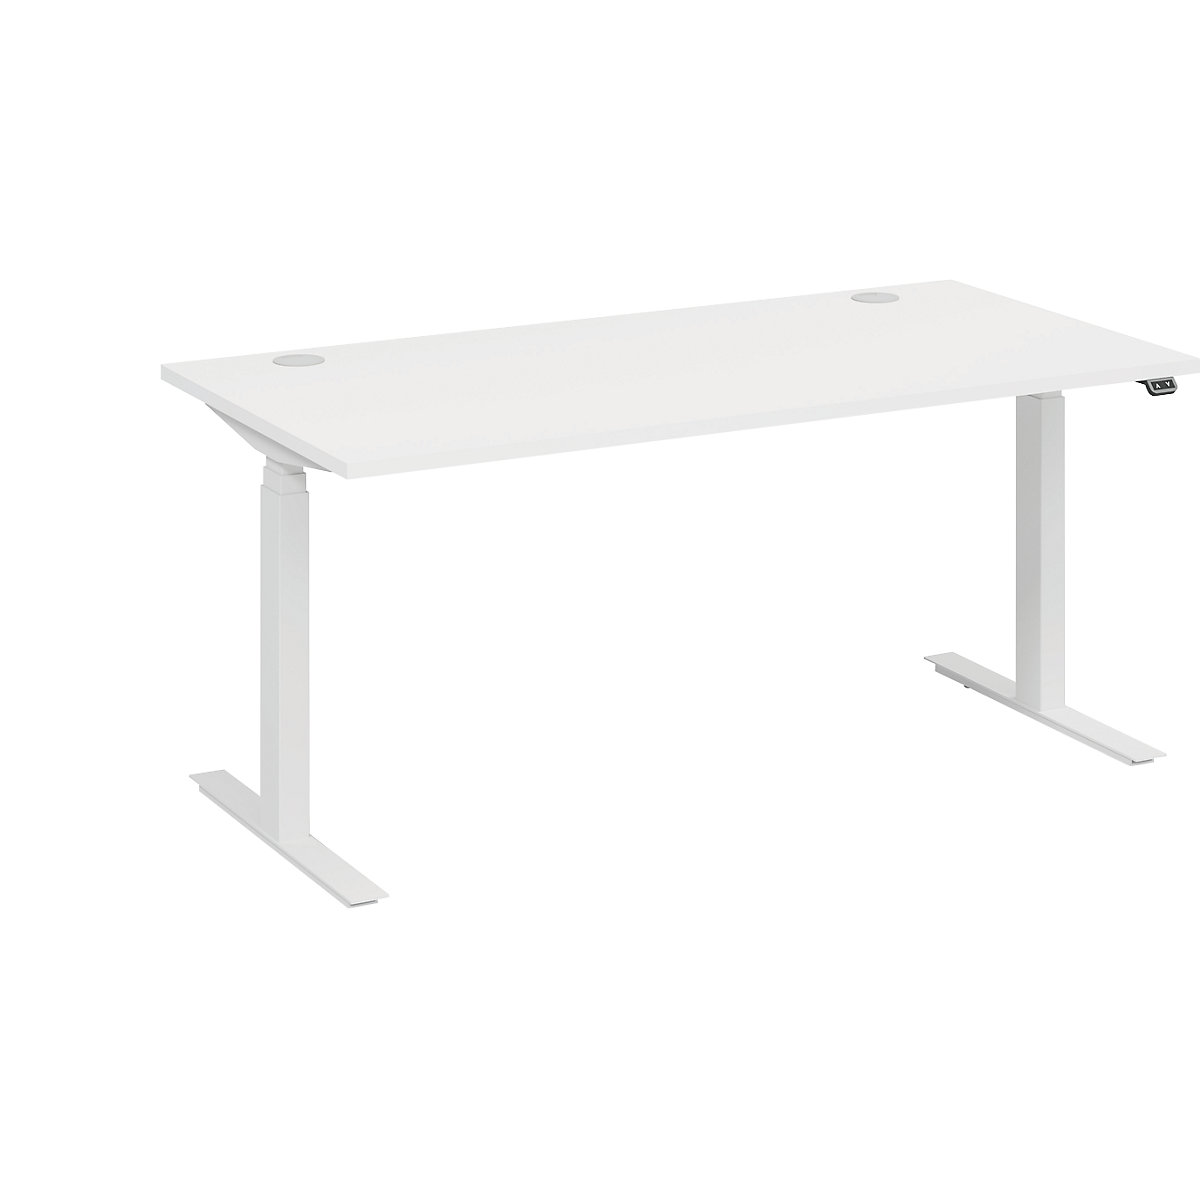 Pisalna miza BOTTOM-UP white, ŠxG 1600 x 800 mm, bele barve